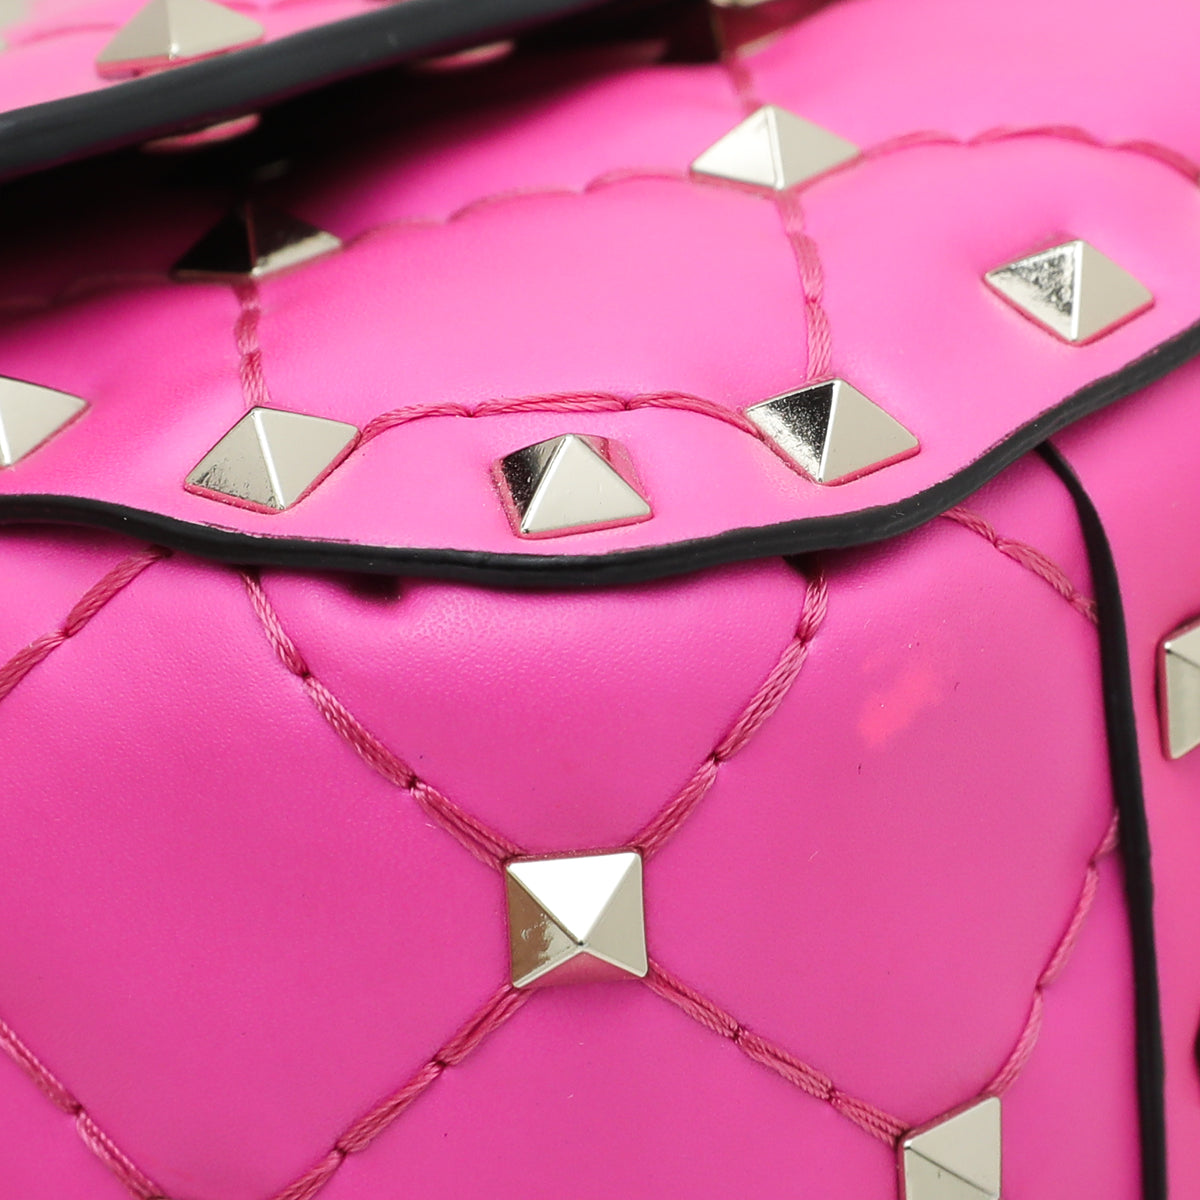 Valentino Neon Pink Rockstud Spike Micro Bag